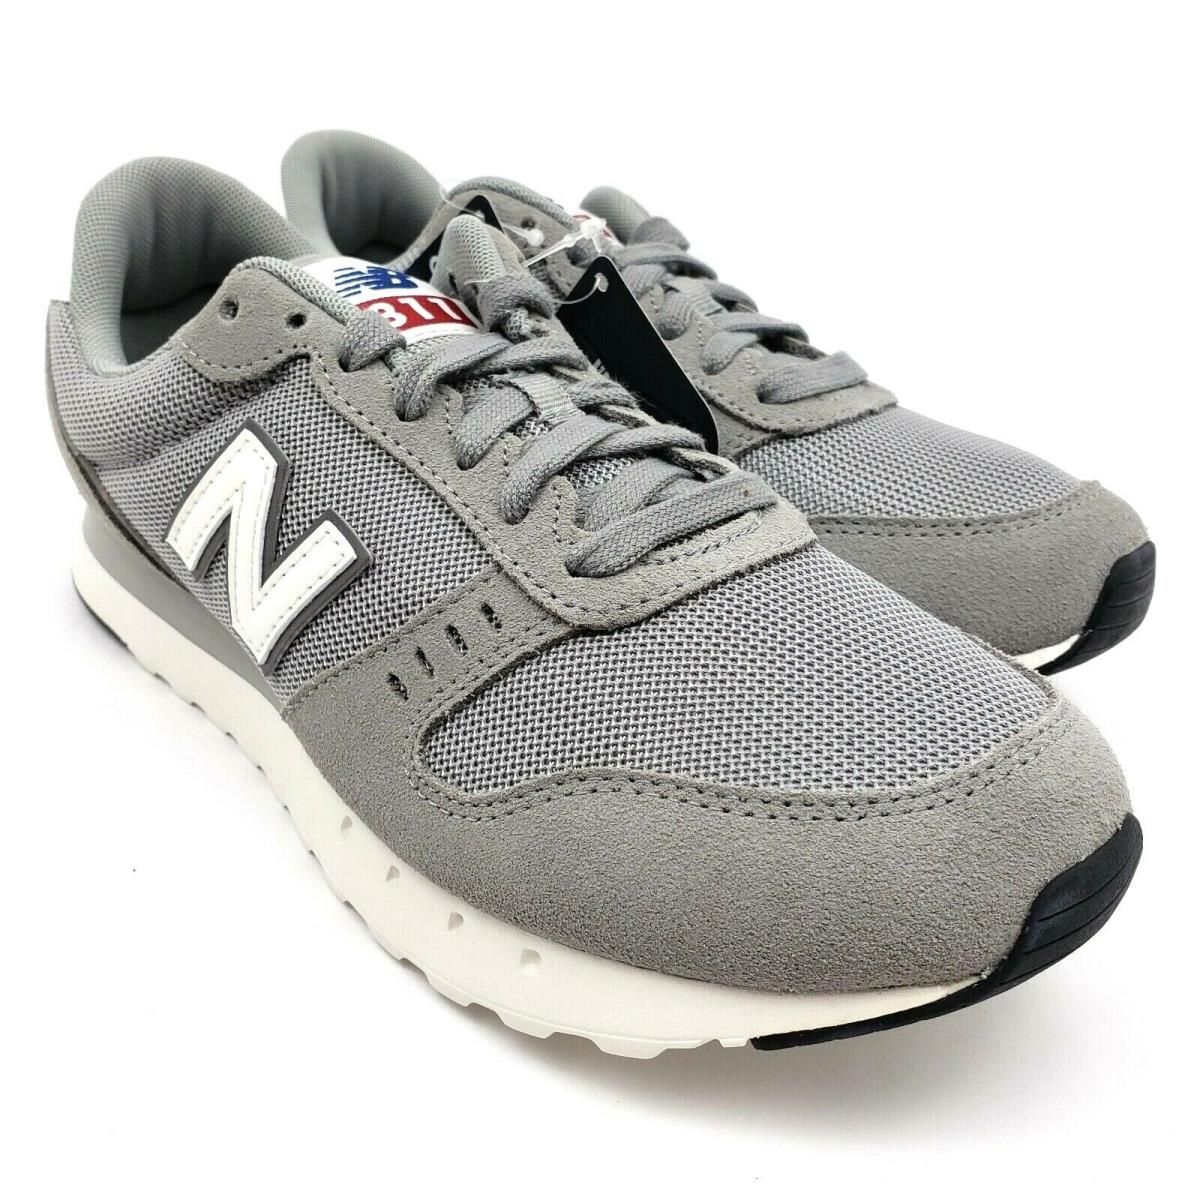 Balance 311v2 Mens Size 8 Gray Lifestyle Sneaker Running Shoes ML311LG2